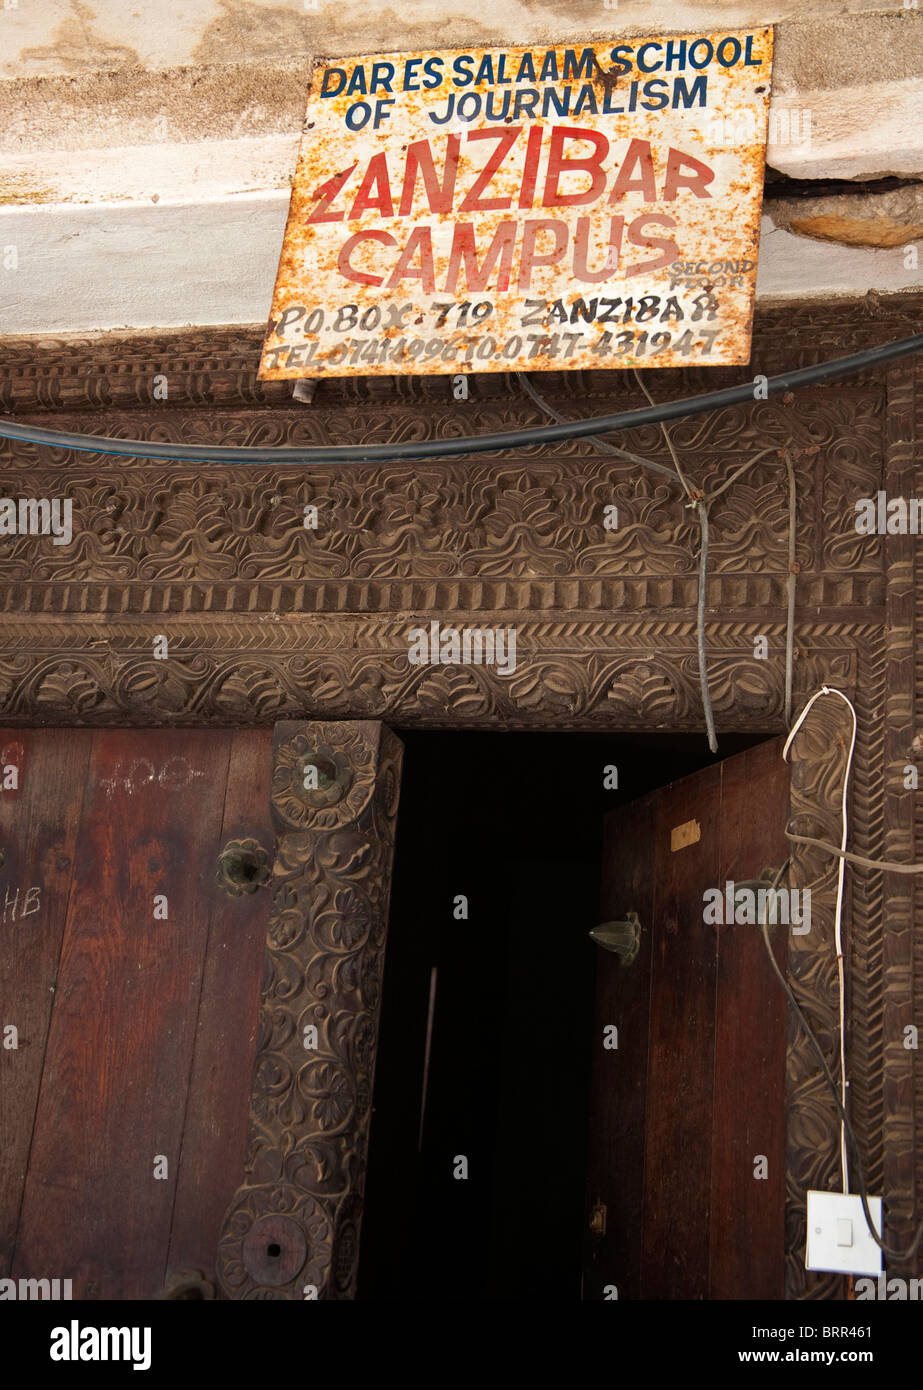 Close-up of wooden door with a rusted signboard advertising the Dar Es Salaam School of Journalism, Zanzibar campus Stock Photo